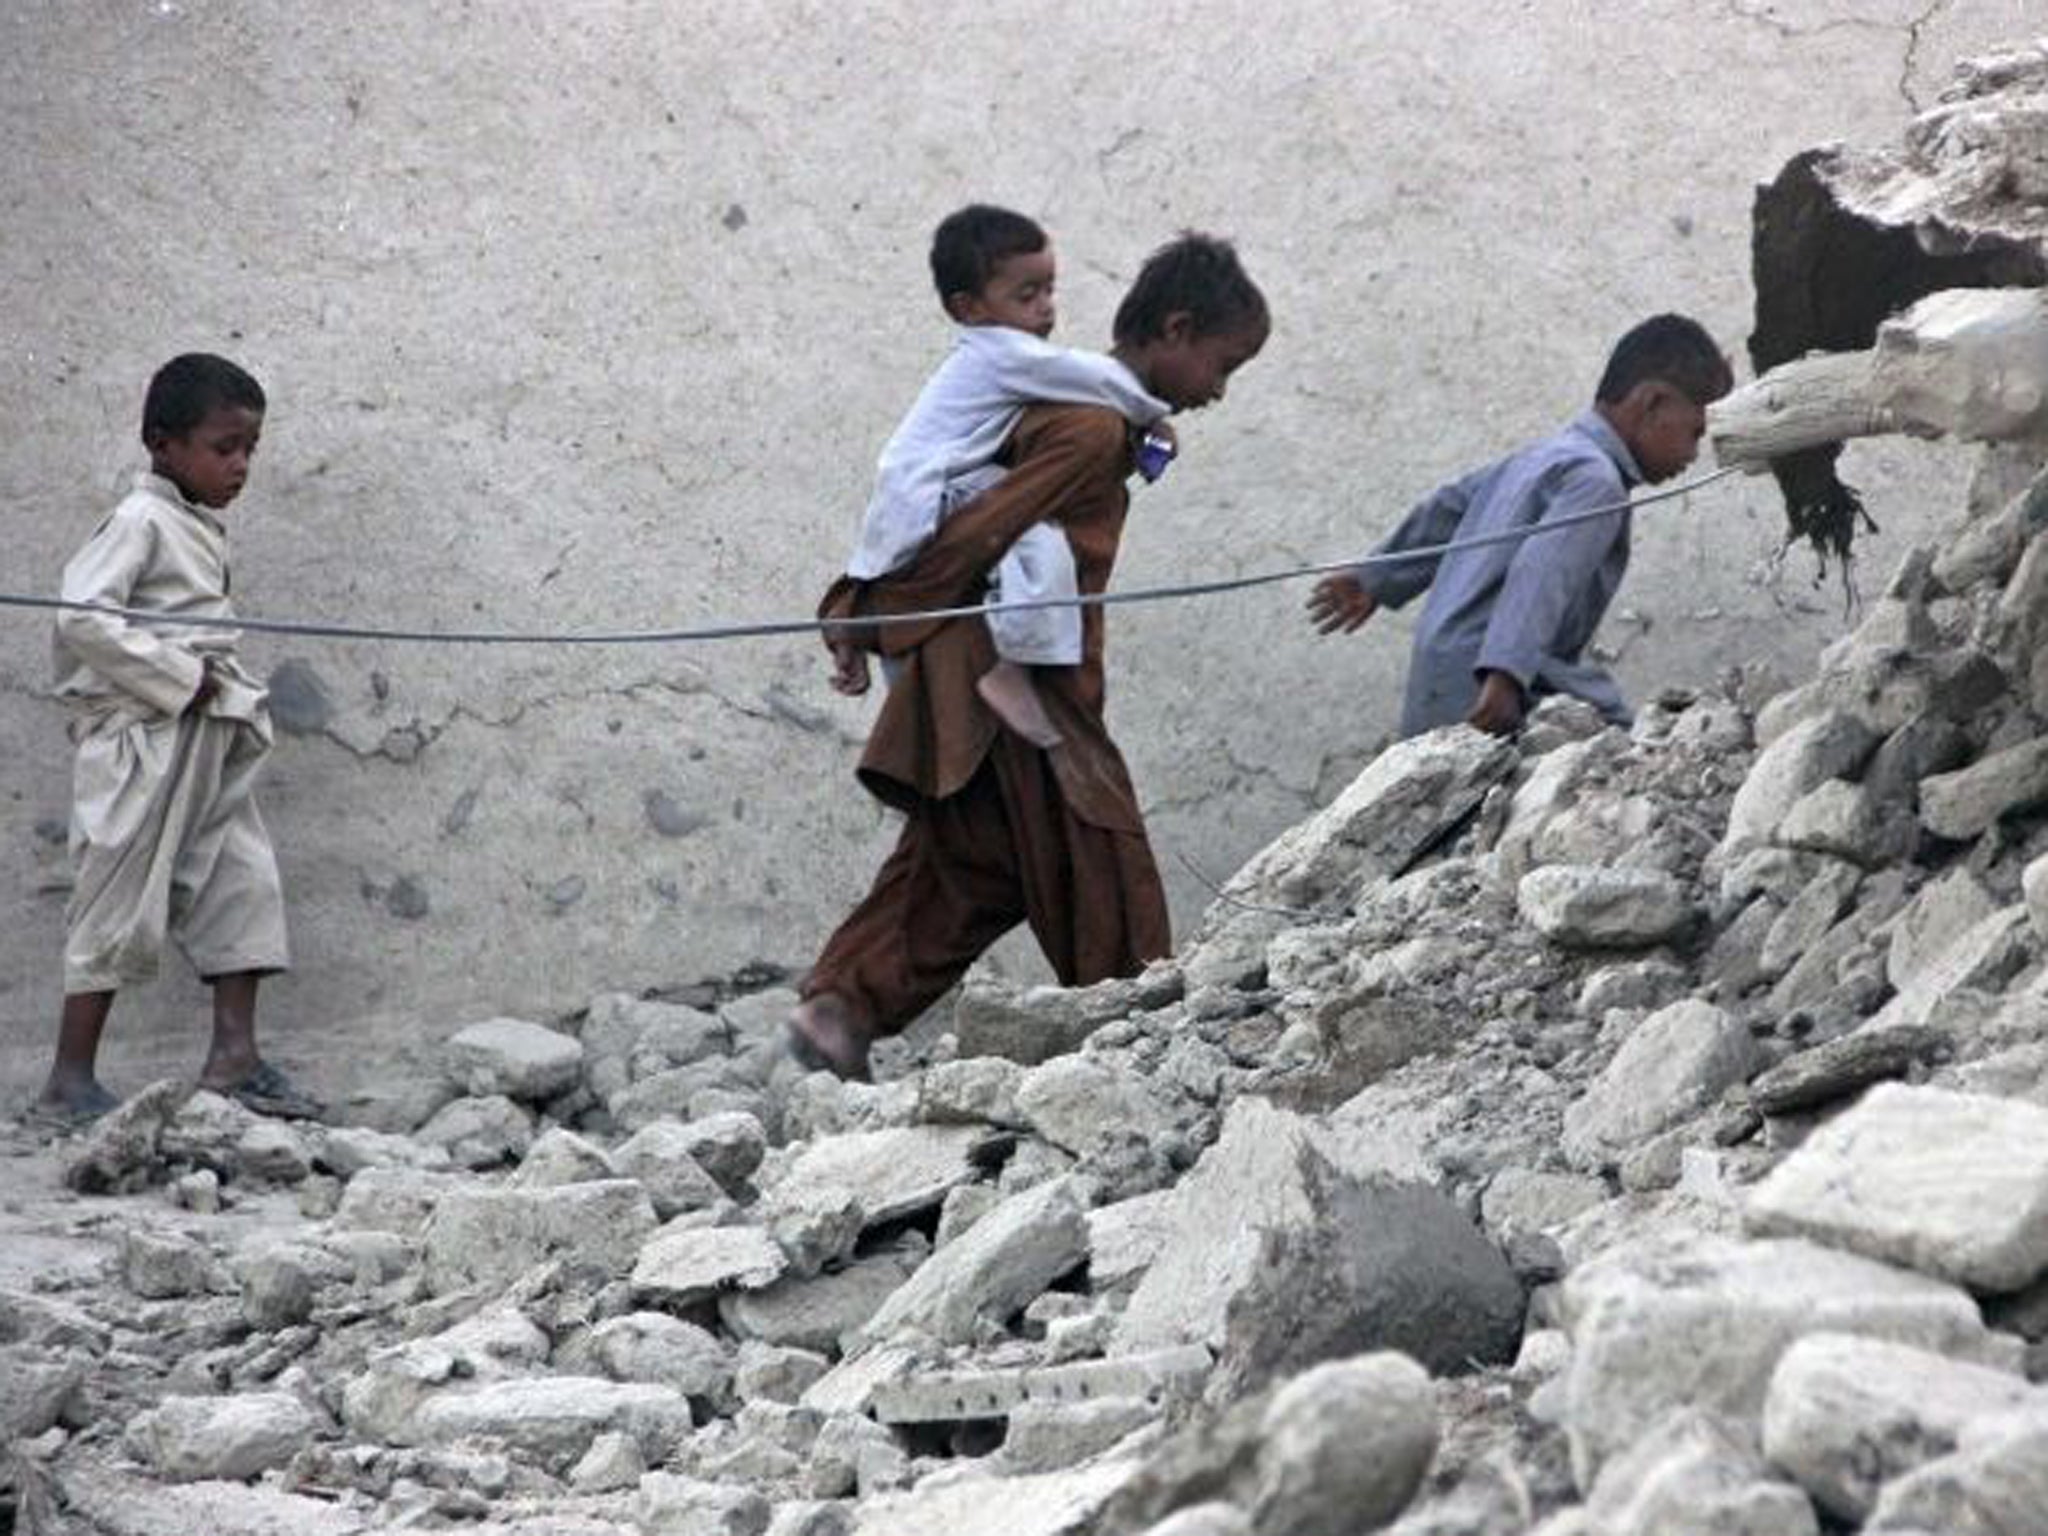 Survivors walk among the rubble in Awaran